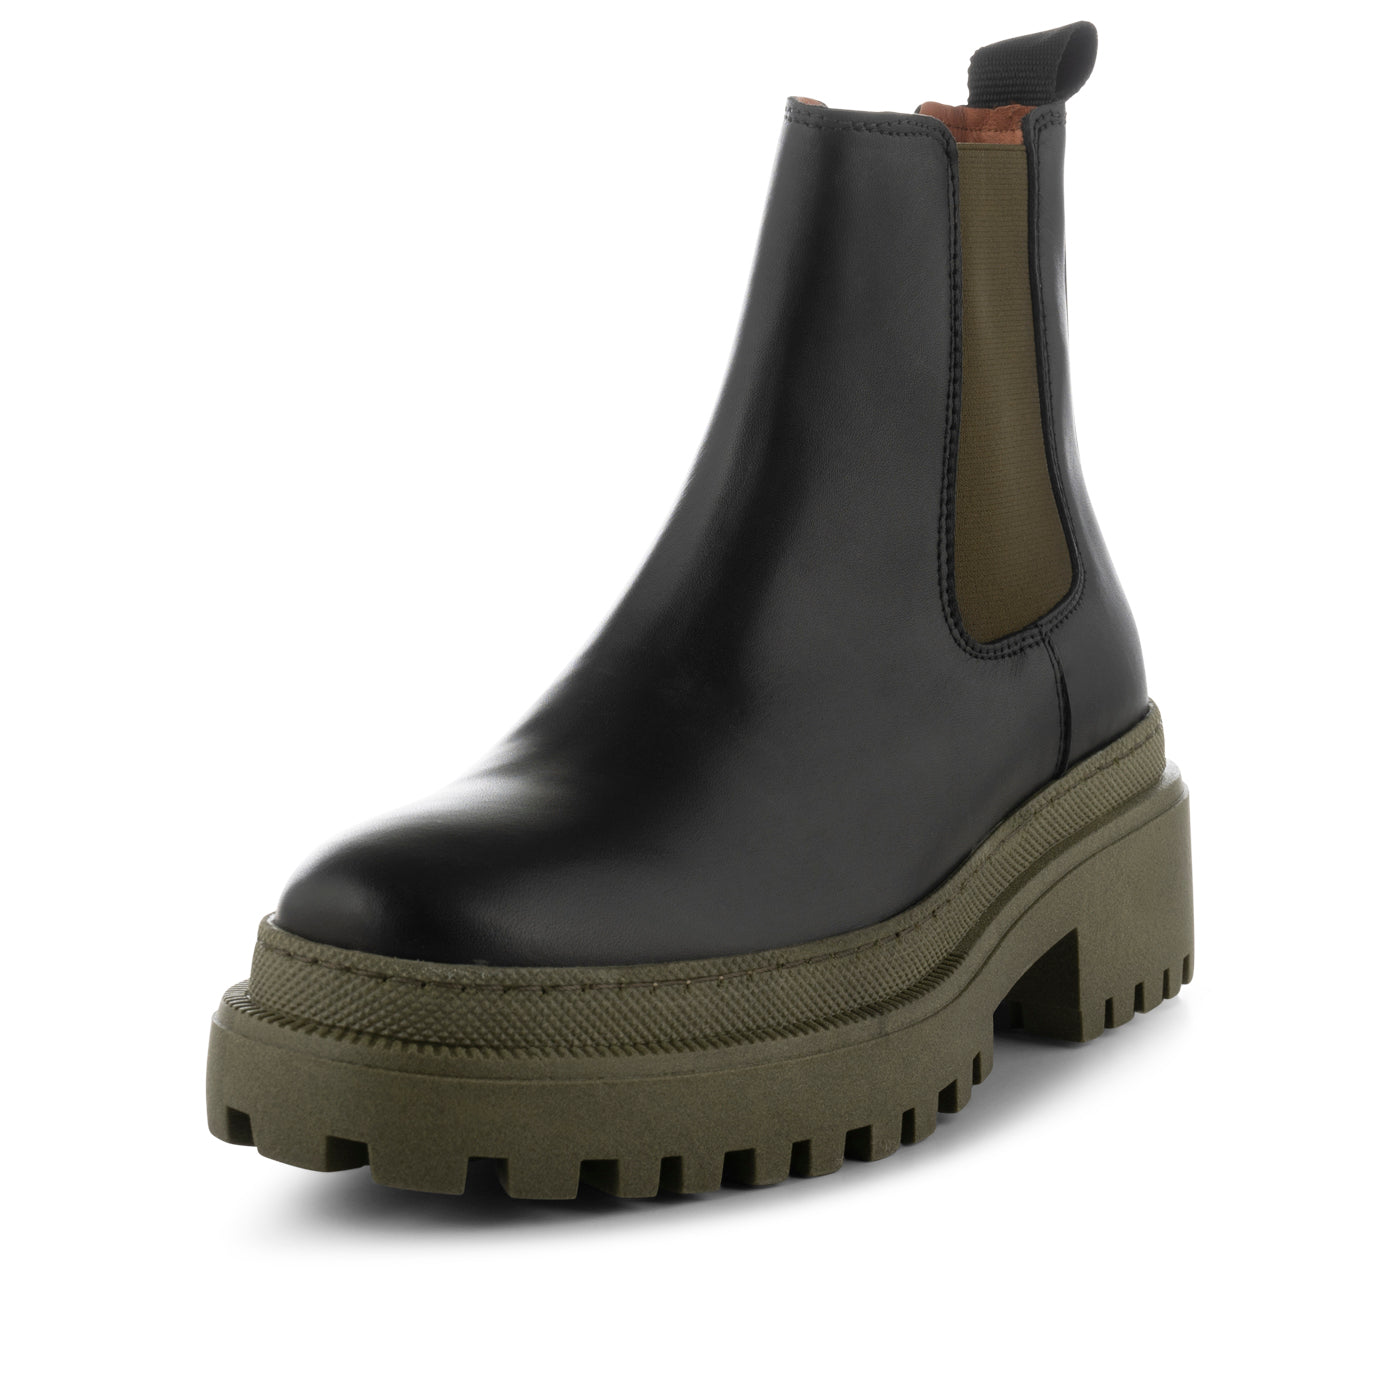 SHOE THE BEAR WOMENS Iona chelsea boot leather Boots 878 BLACK/KHAKI